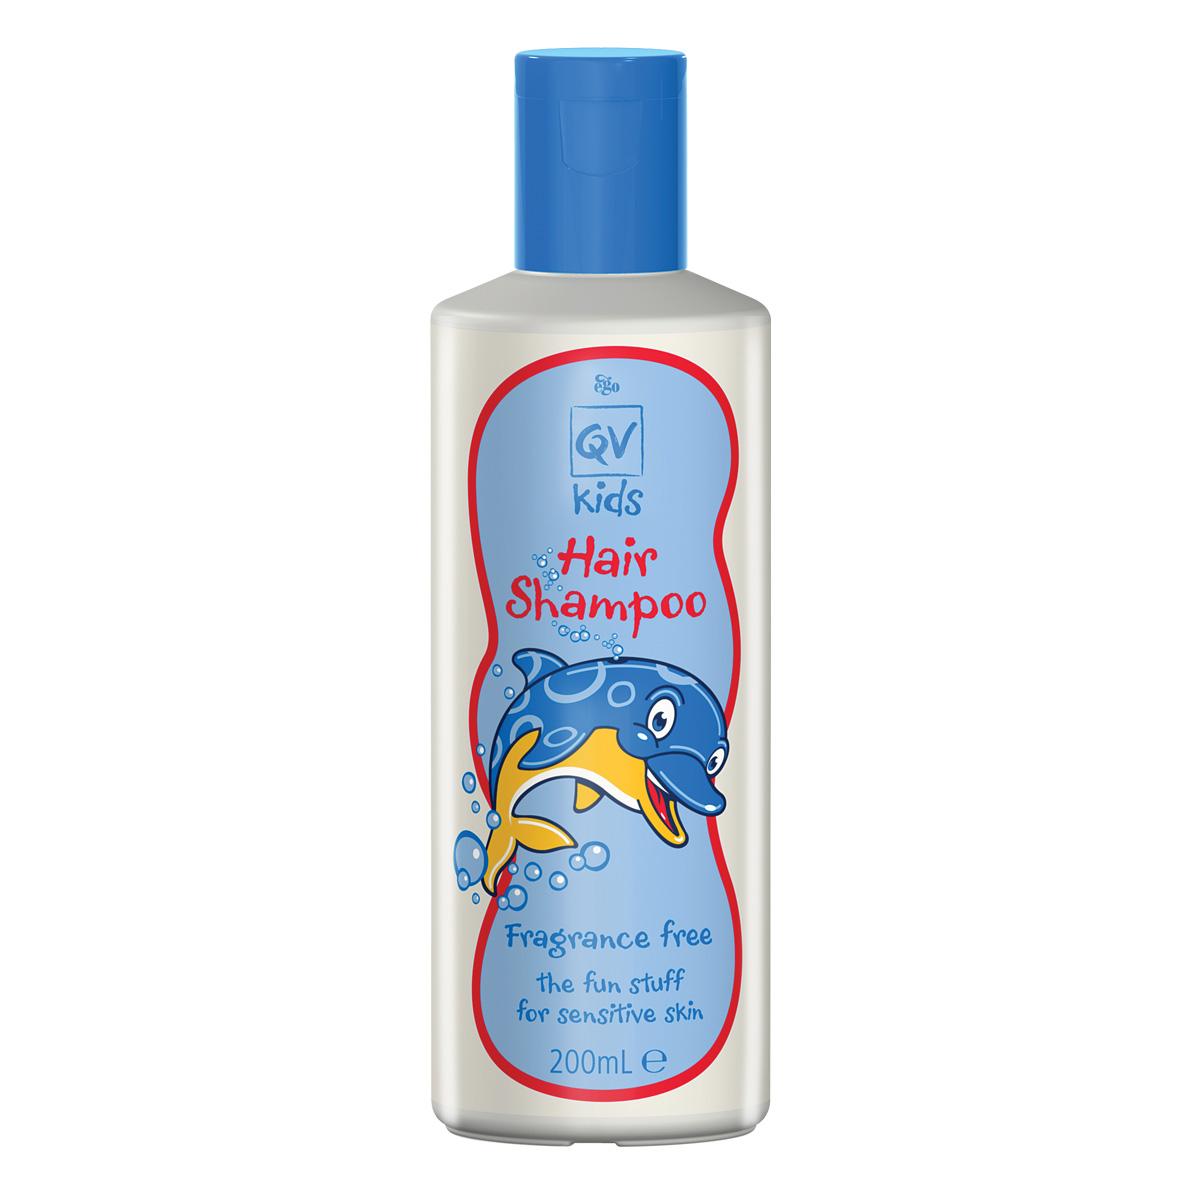 QV Kids Hair Shampoo - کیووی کیدز شامپو